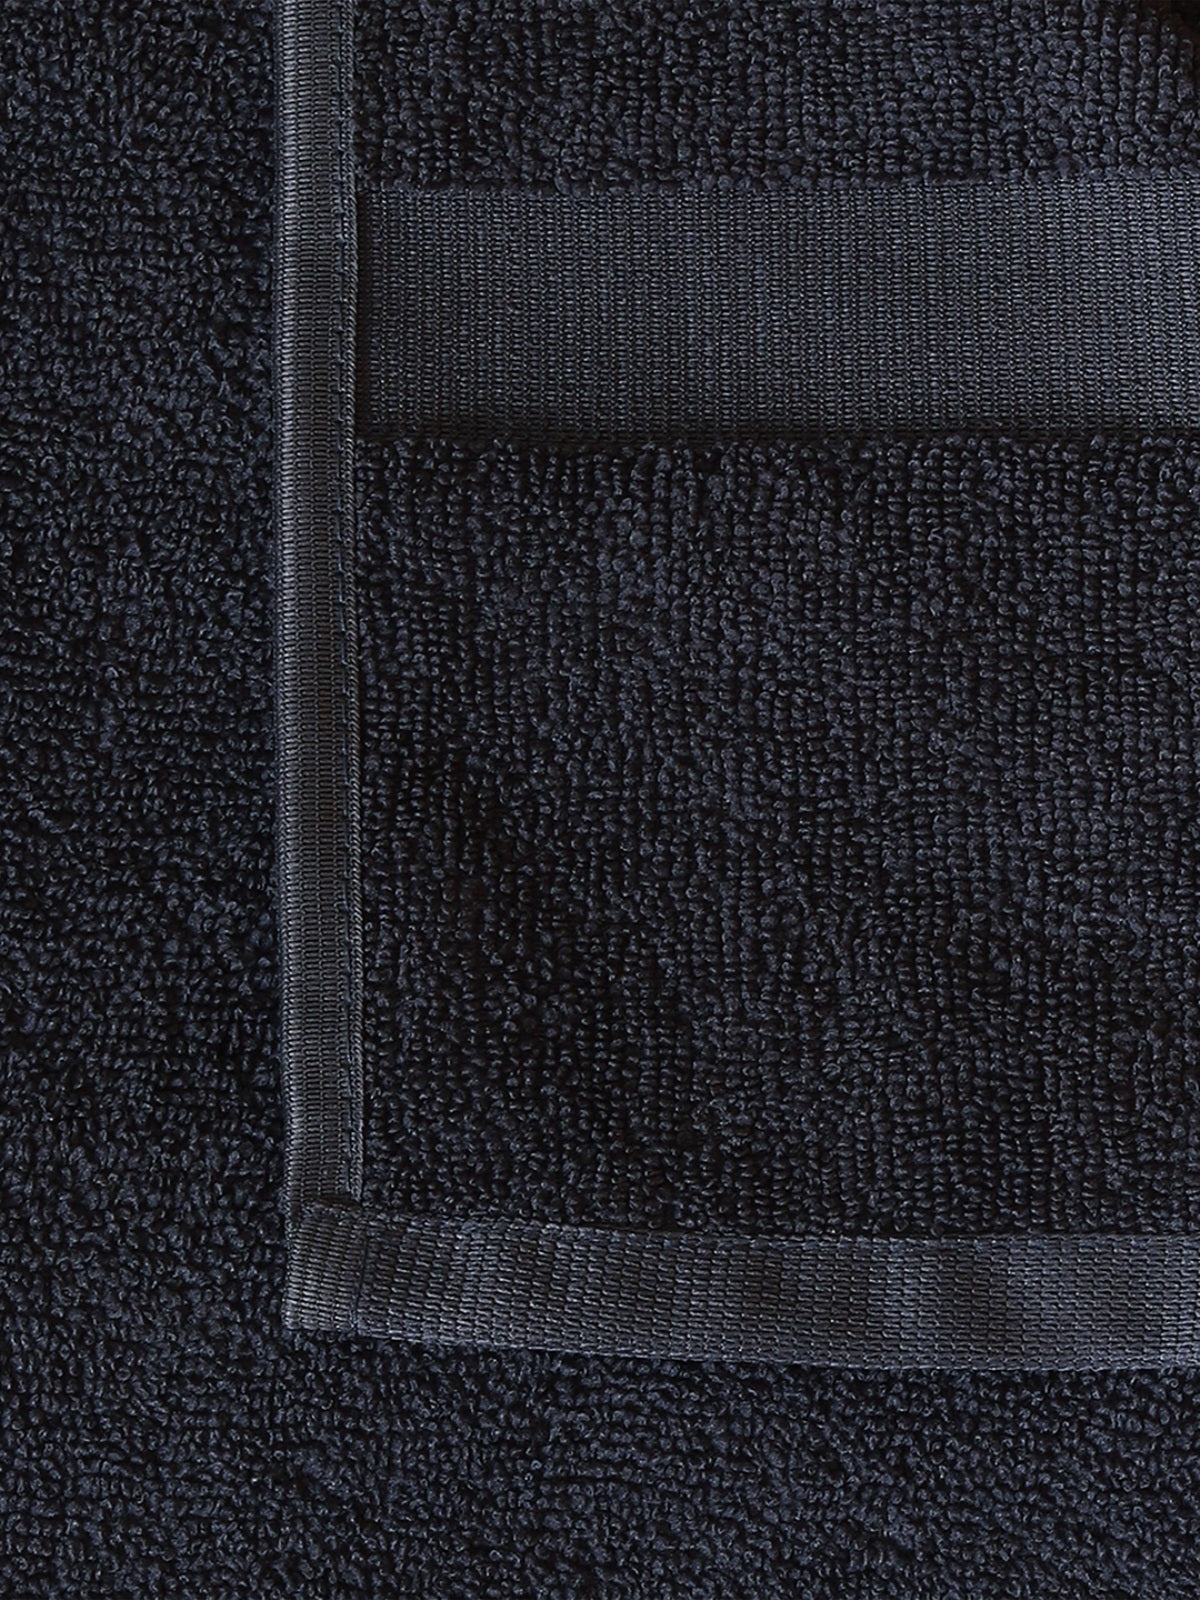 Grey Solid Patterned Microfiber Towel